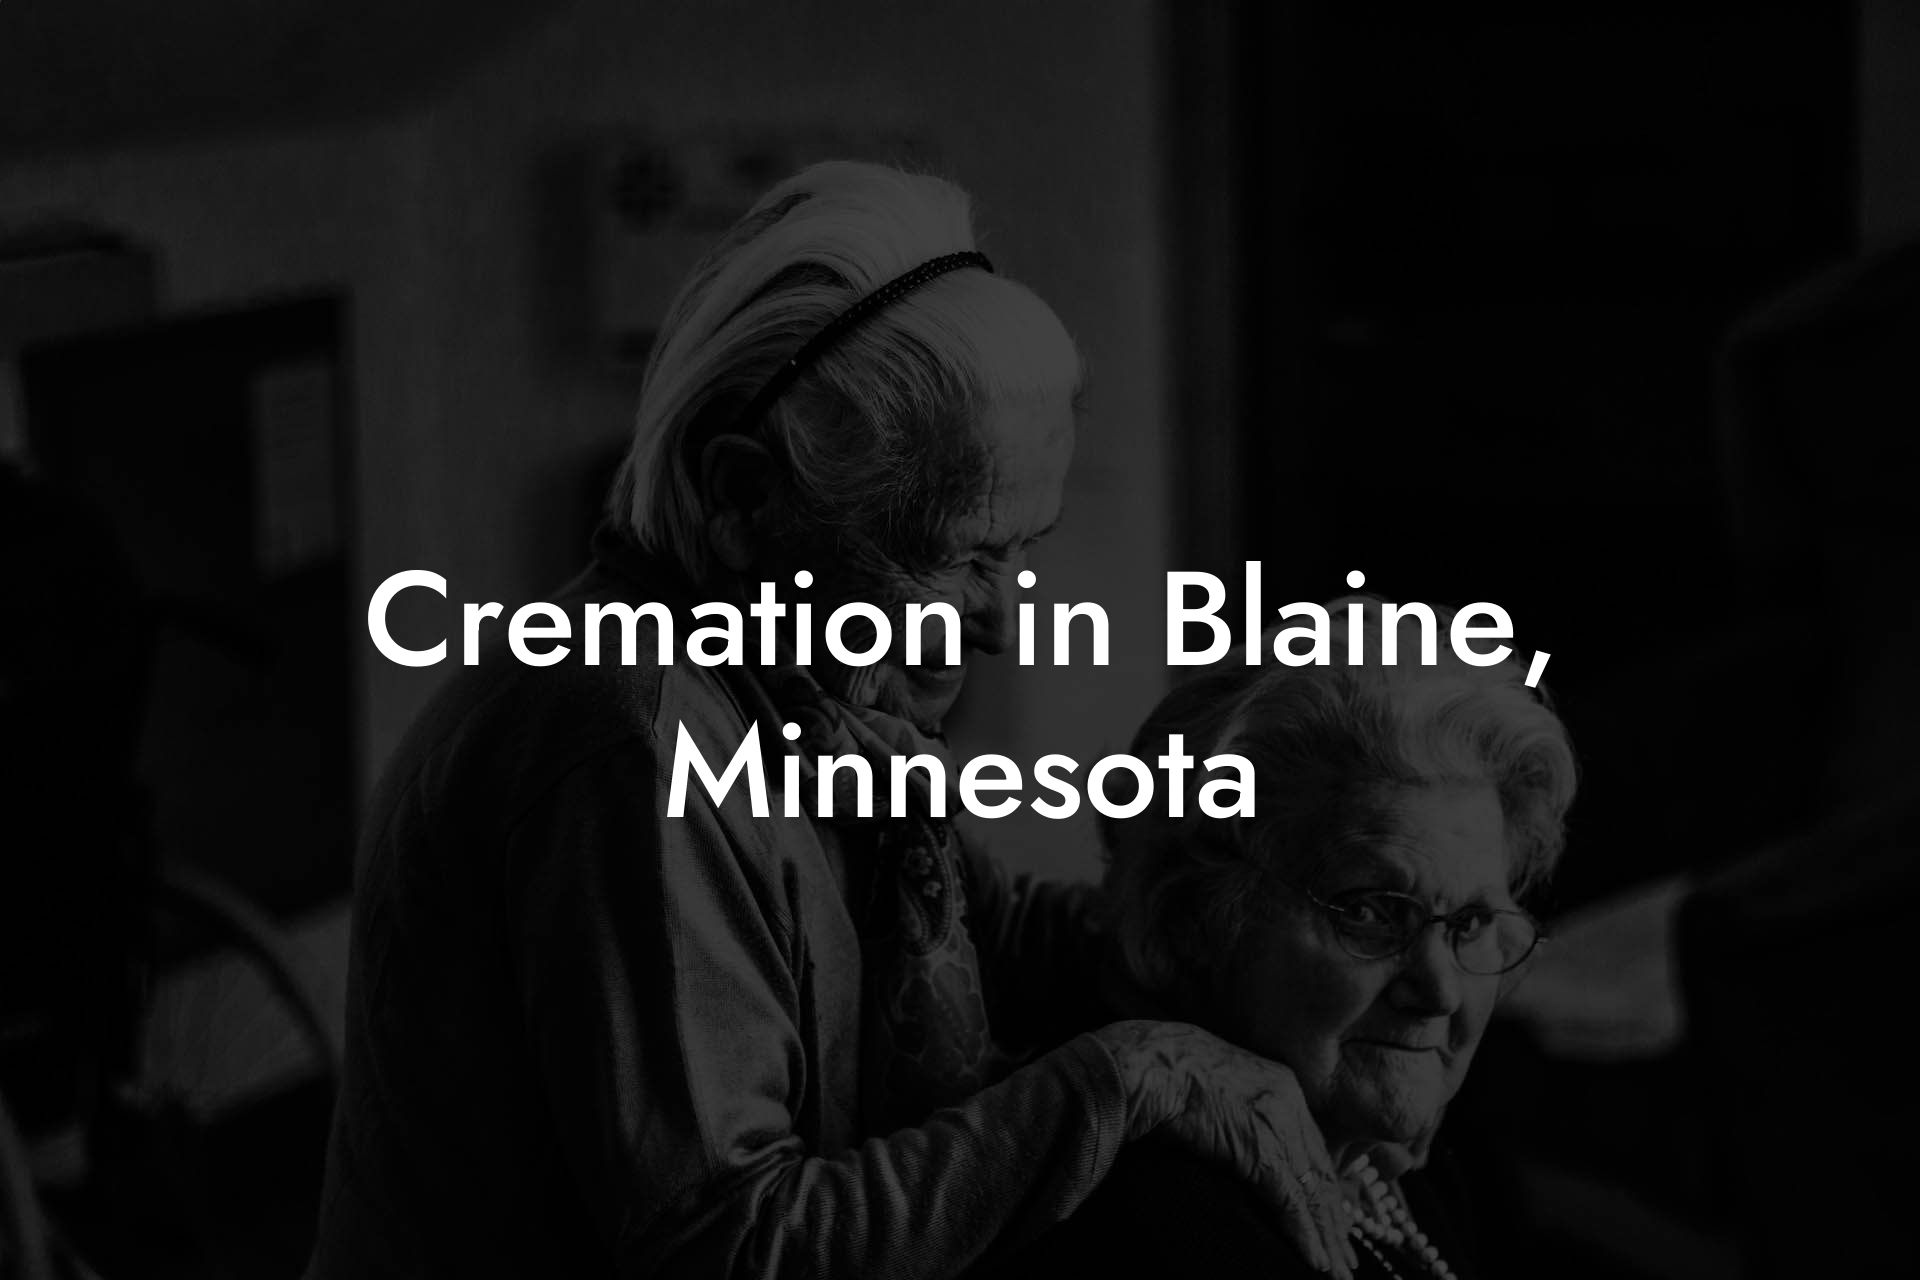 Cremation in Blaine, Minnesota